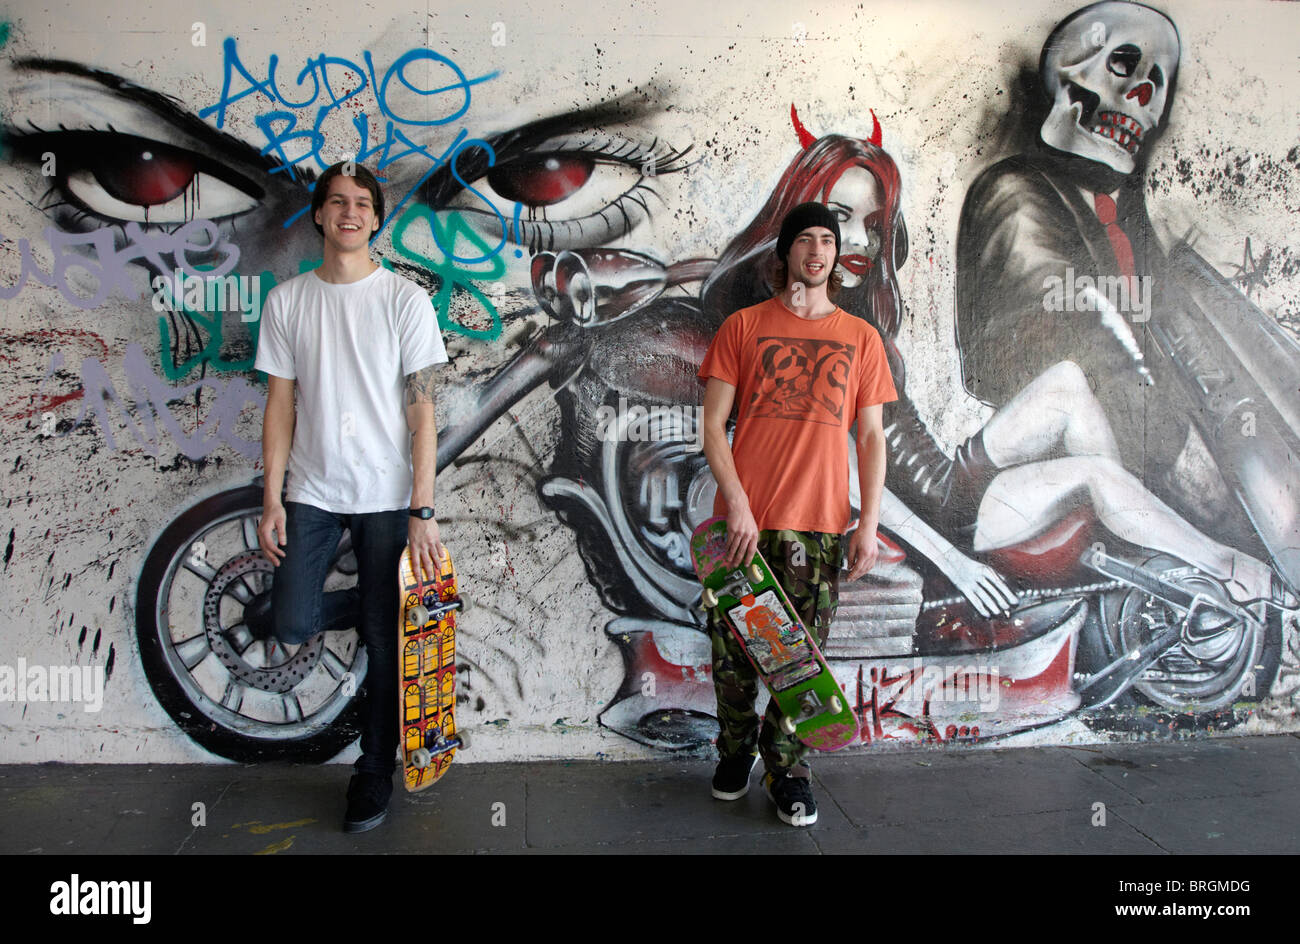 Devil Woman Graffiti With Two Male Skateboarder South Bank London UK Europe Stock Photo